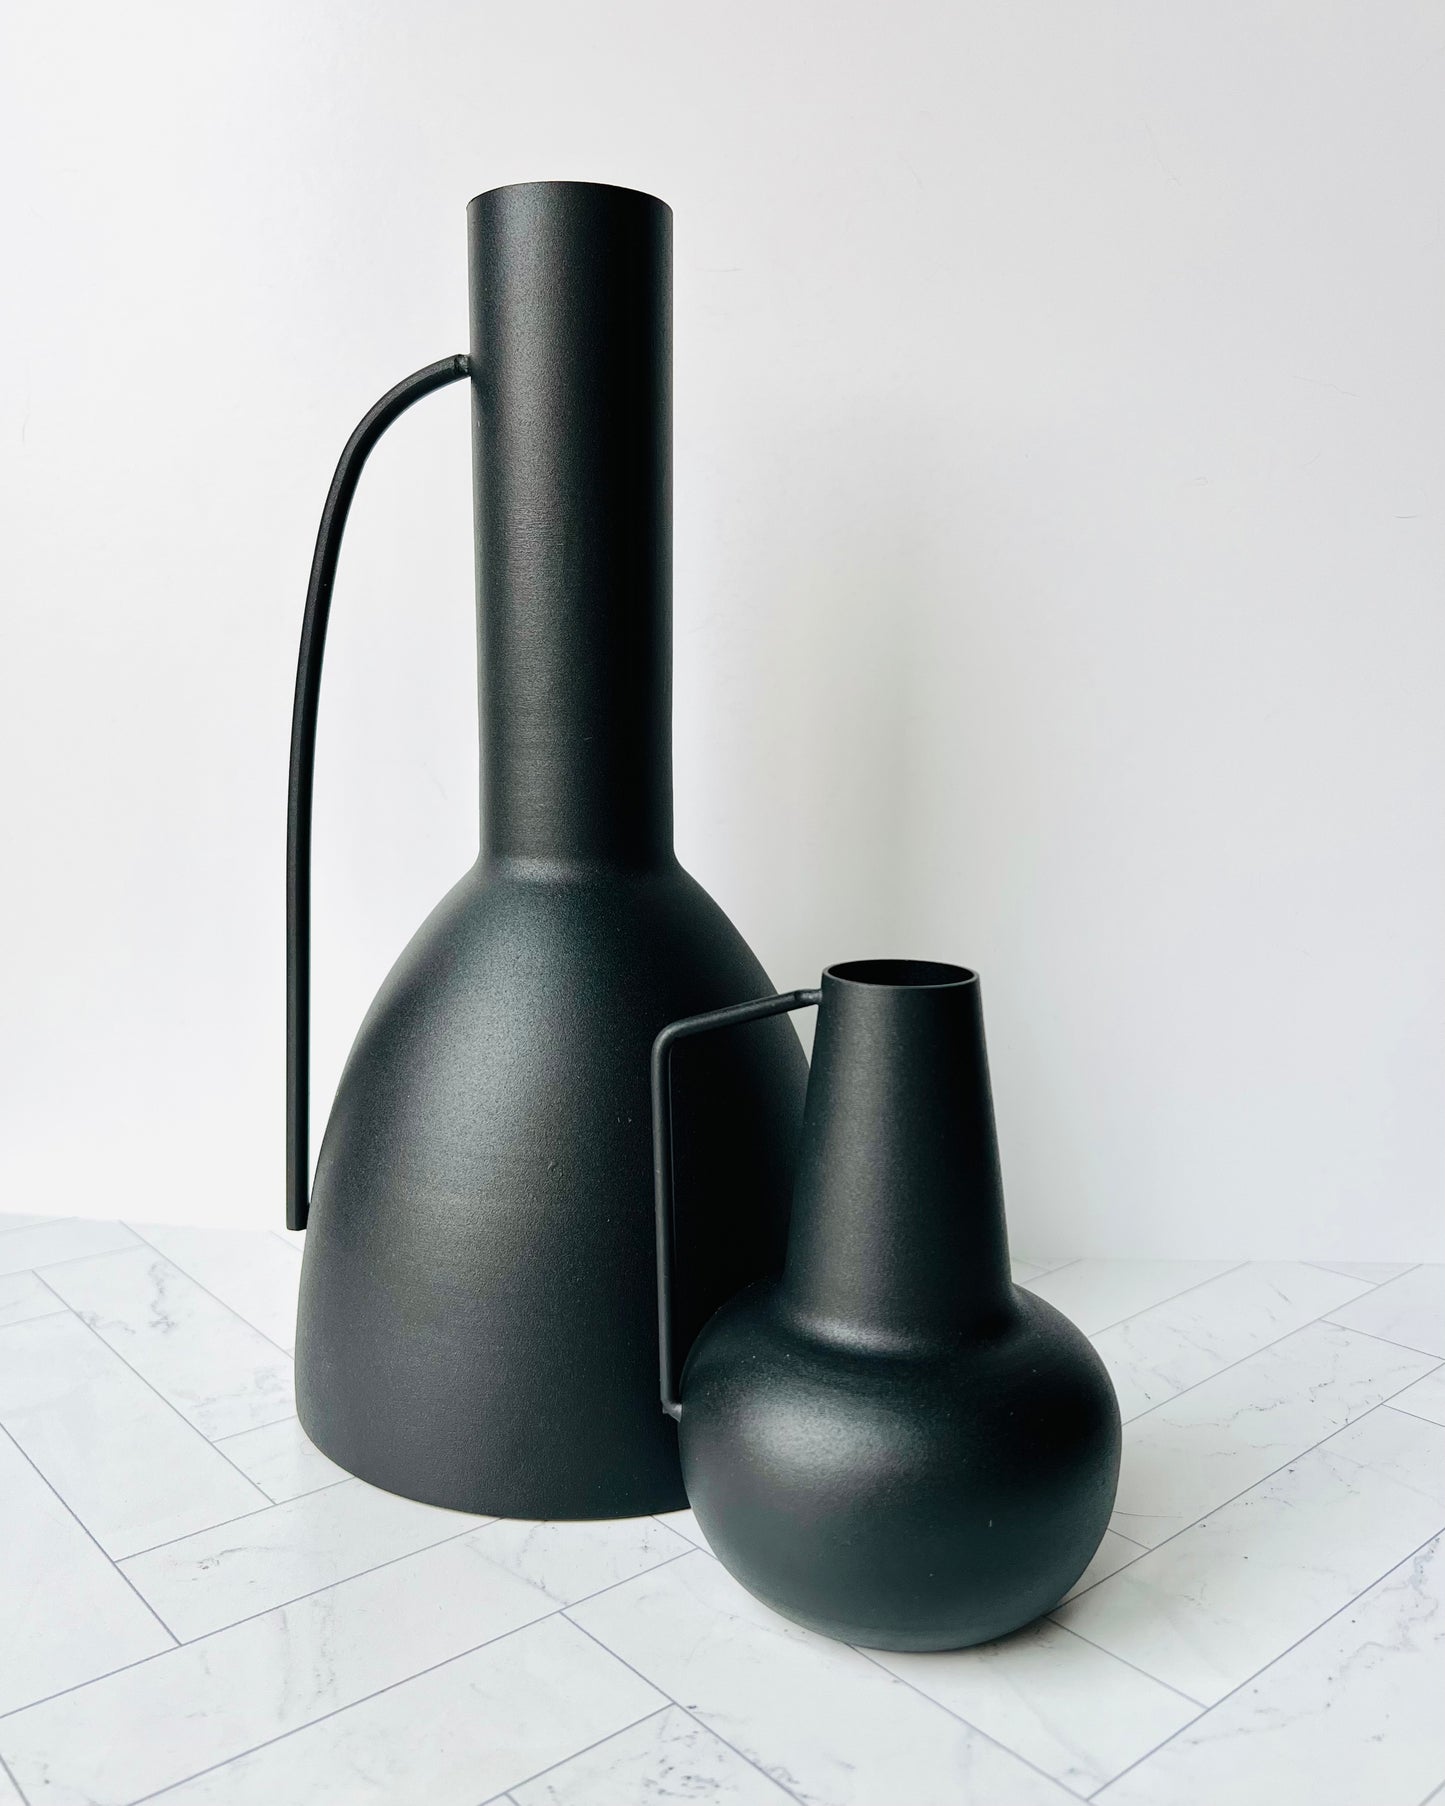 The Sleek Bud Vase sitting on a white tiled surface next to the larger Sleek Metal Vase